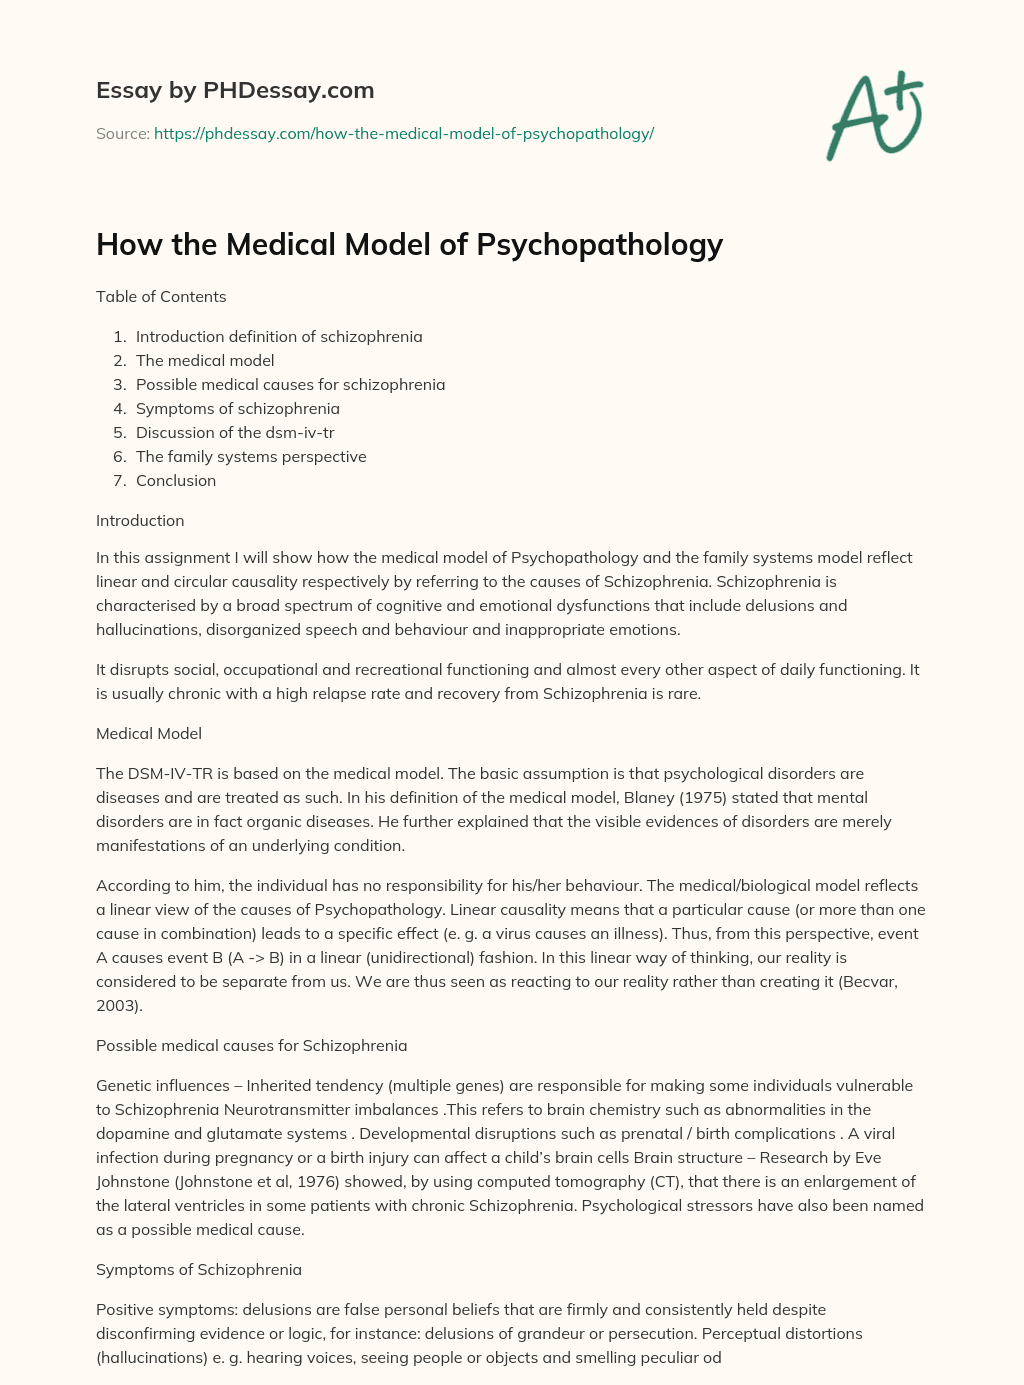 How the Medical Model of Psychopathology essay